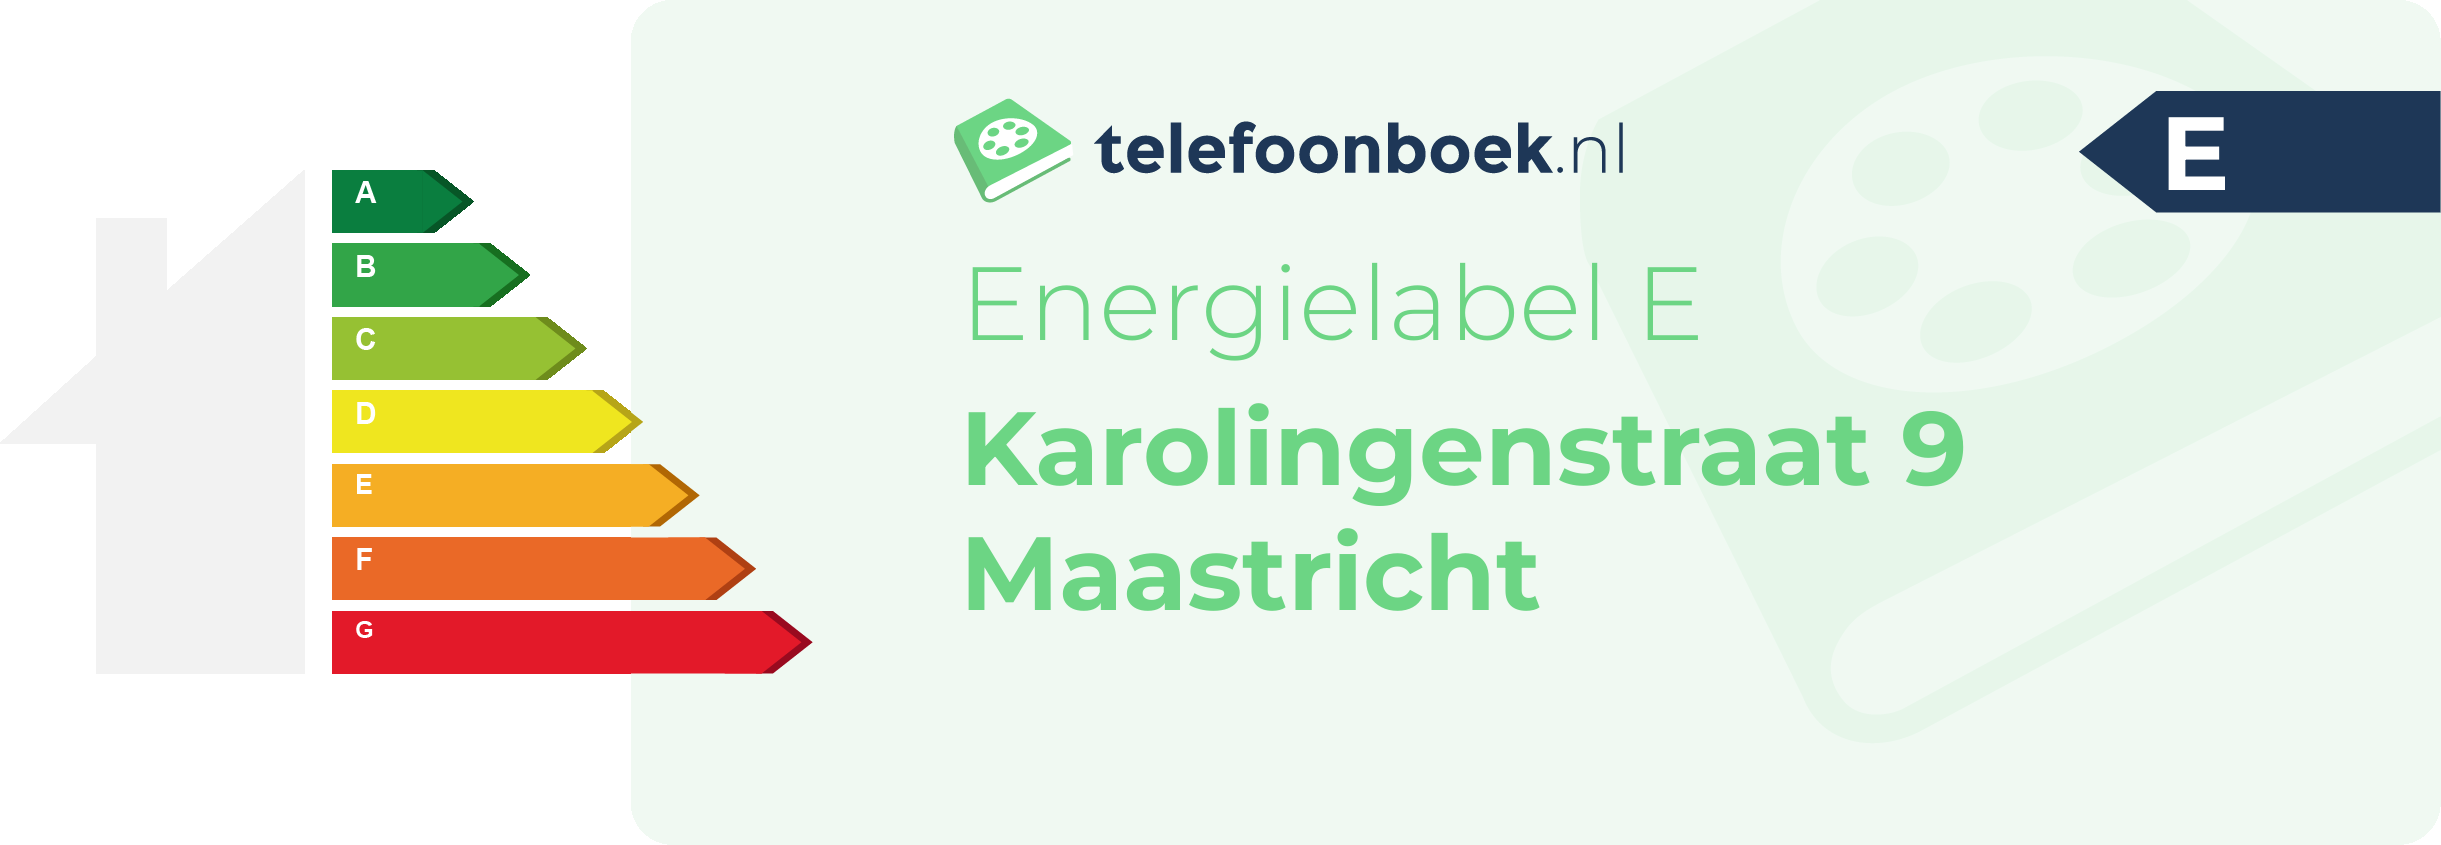 Energielabel Karolingenstraat 9 Maastricht